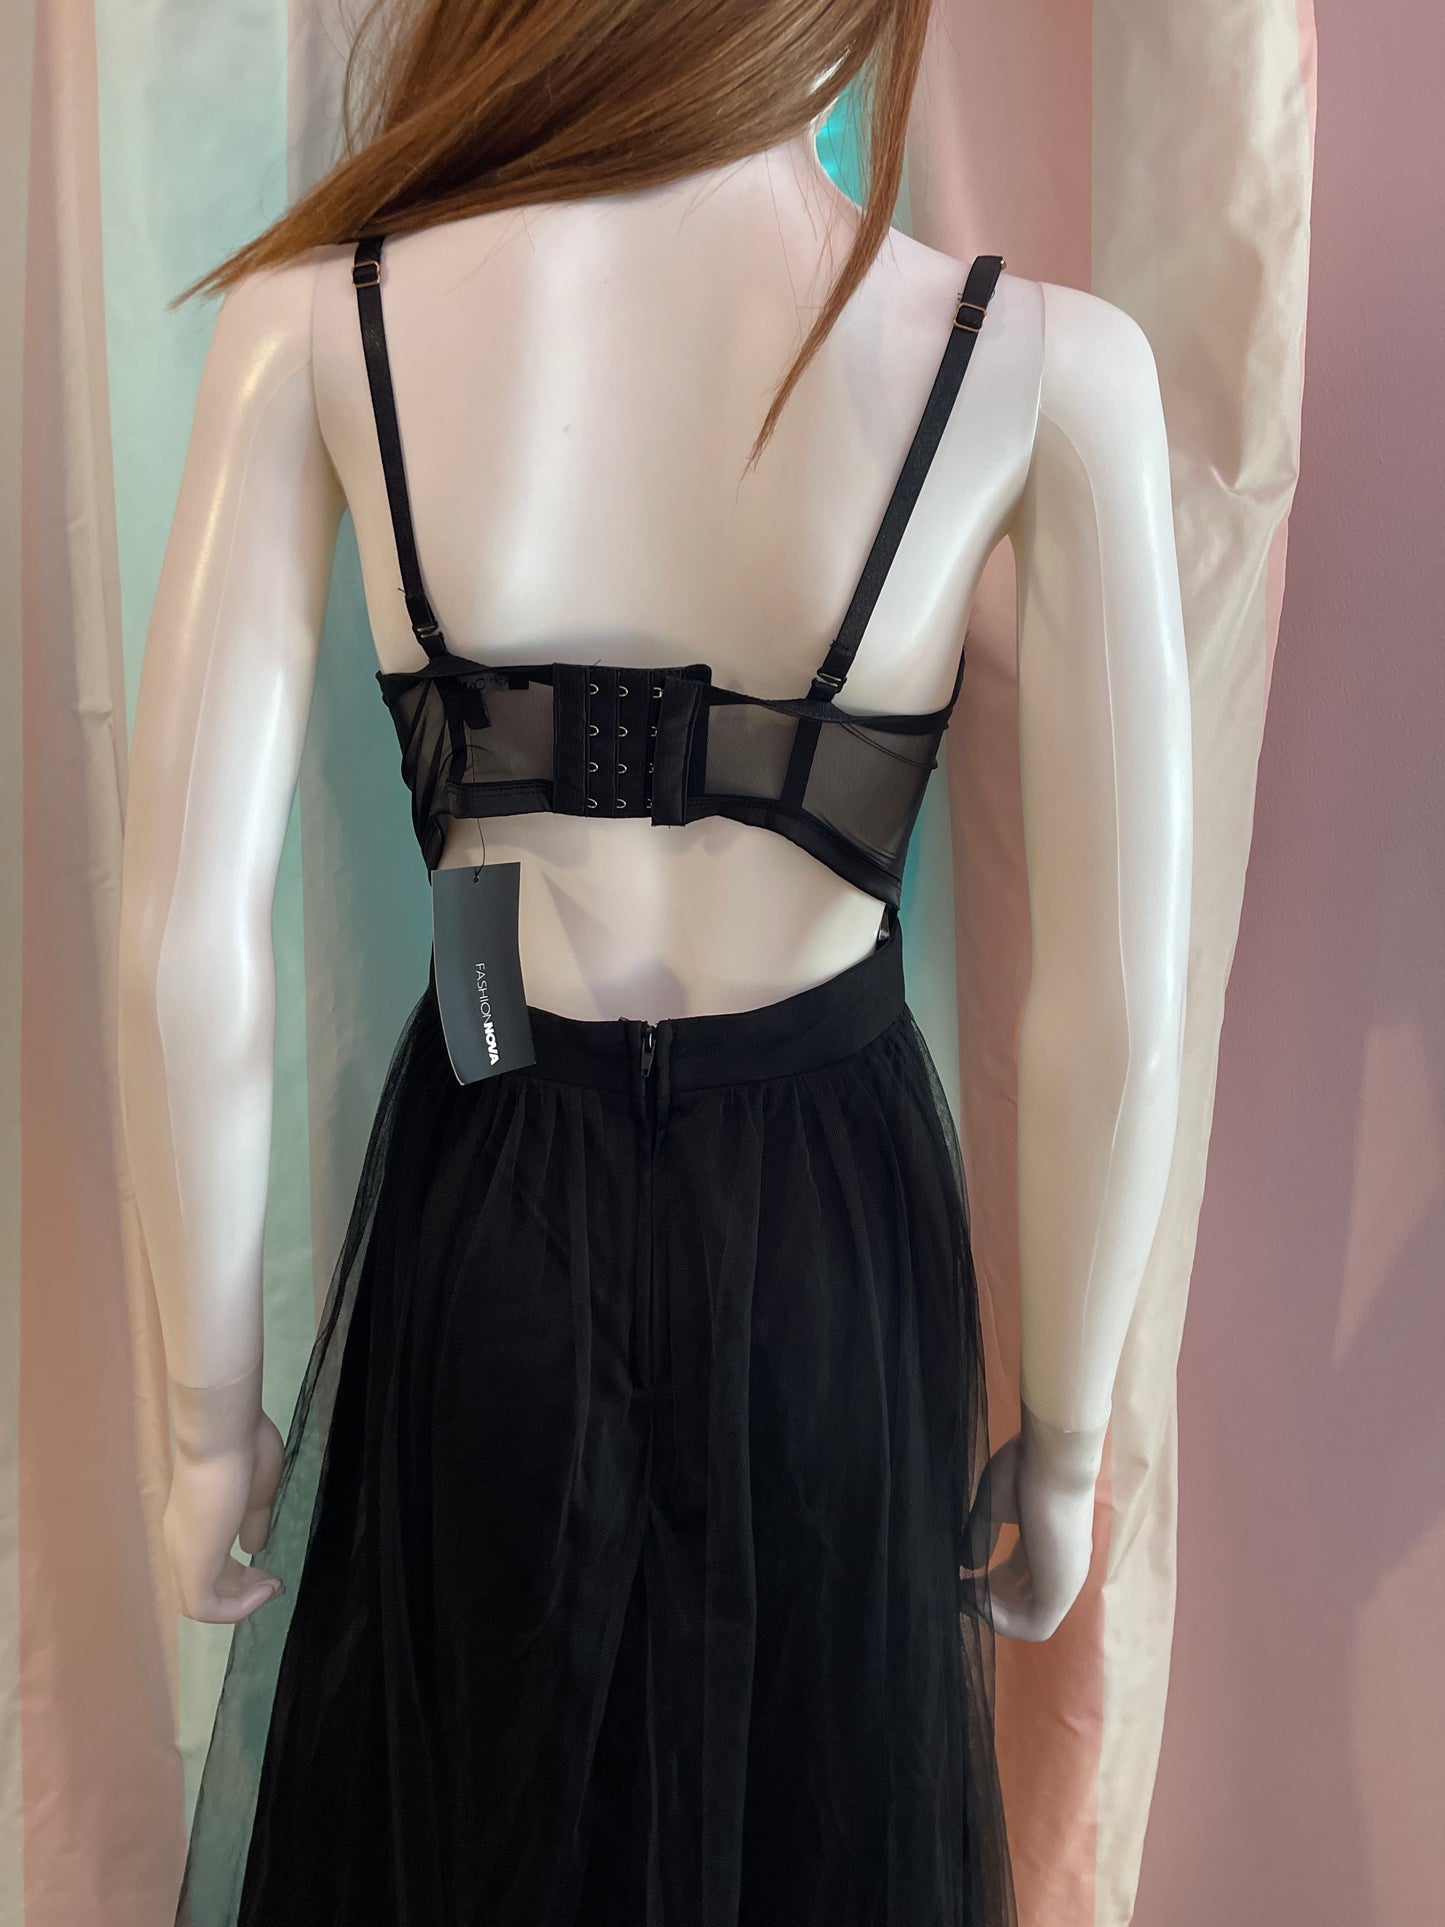 Black corset sheer dress chiffon gown Nwt